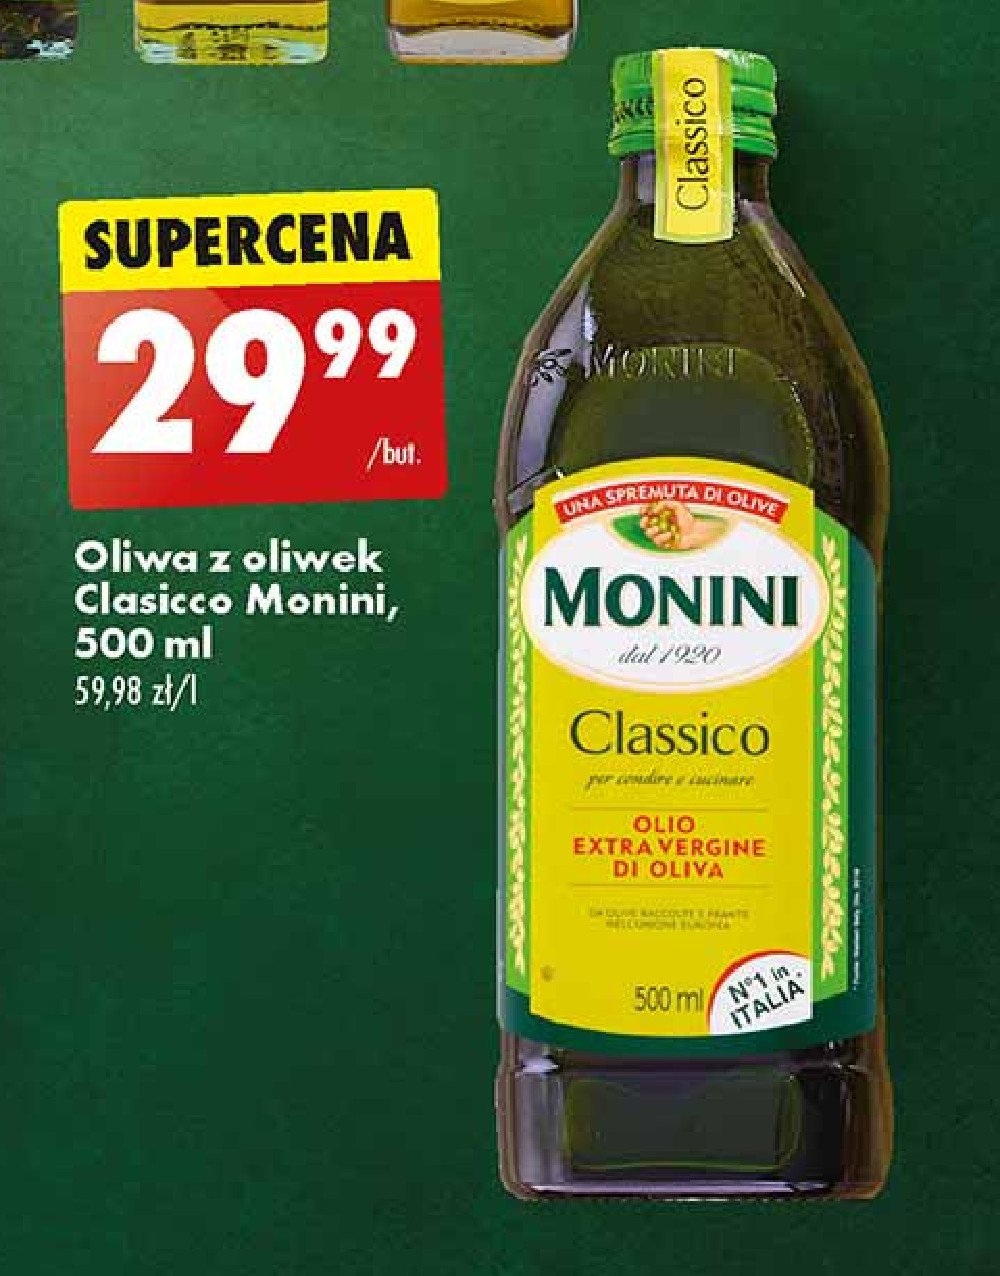 Oliwa z oliwek extra vergine Monini classico promocja